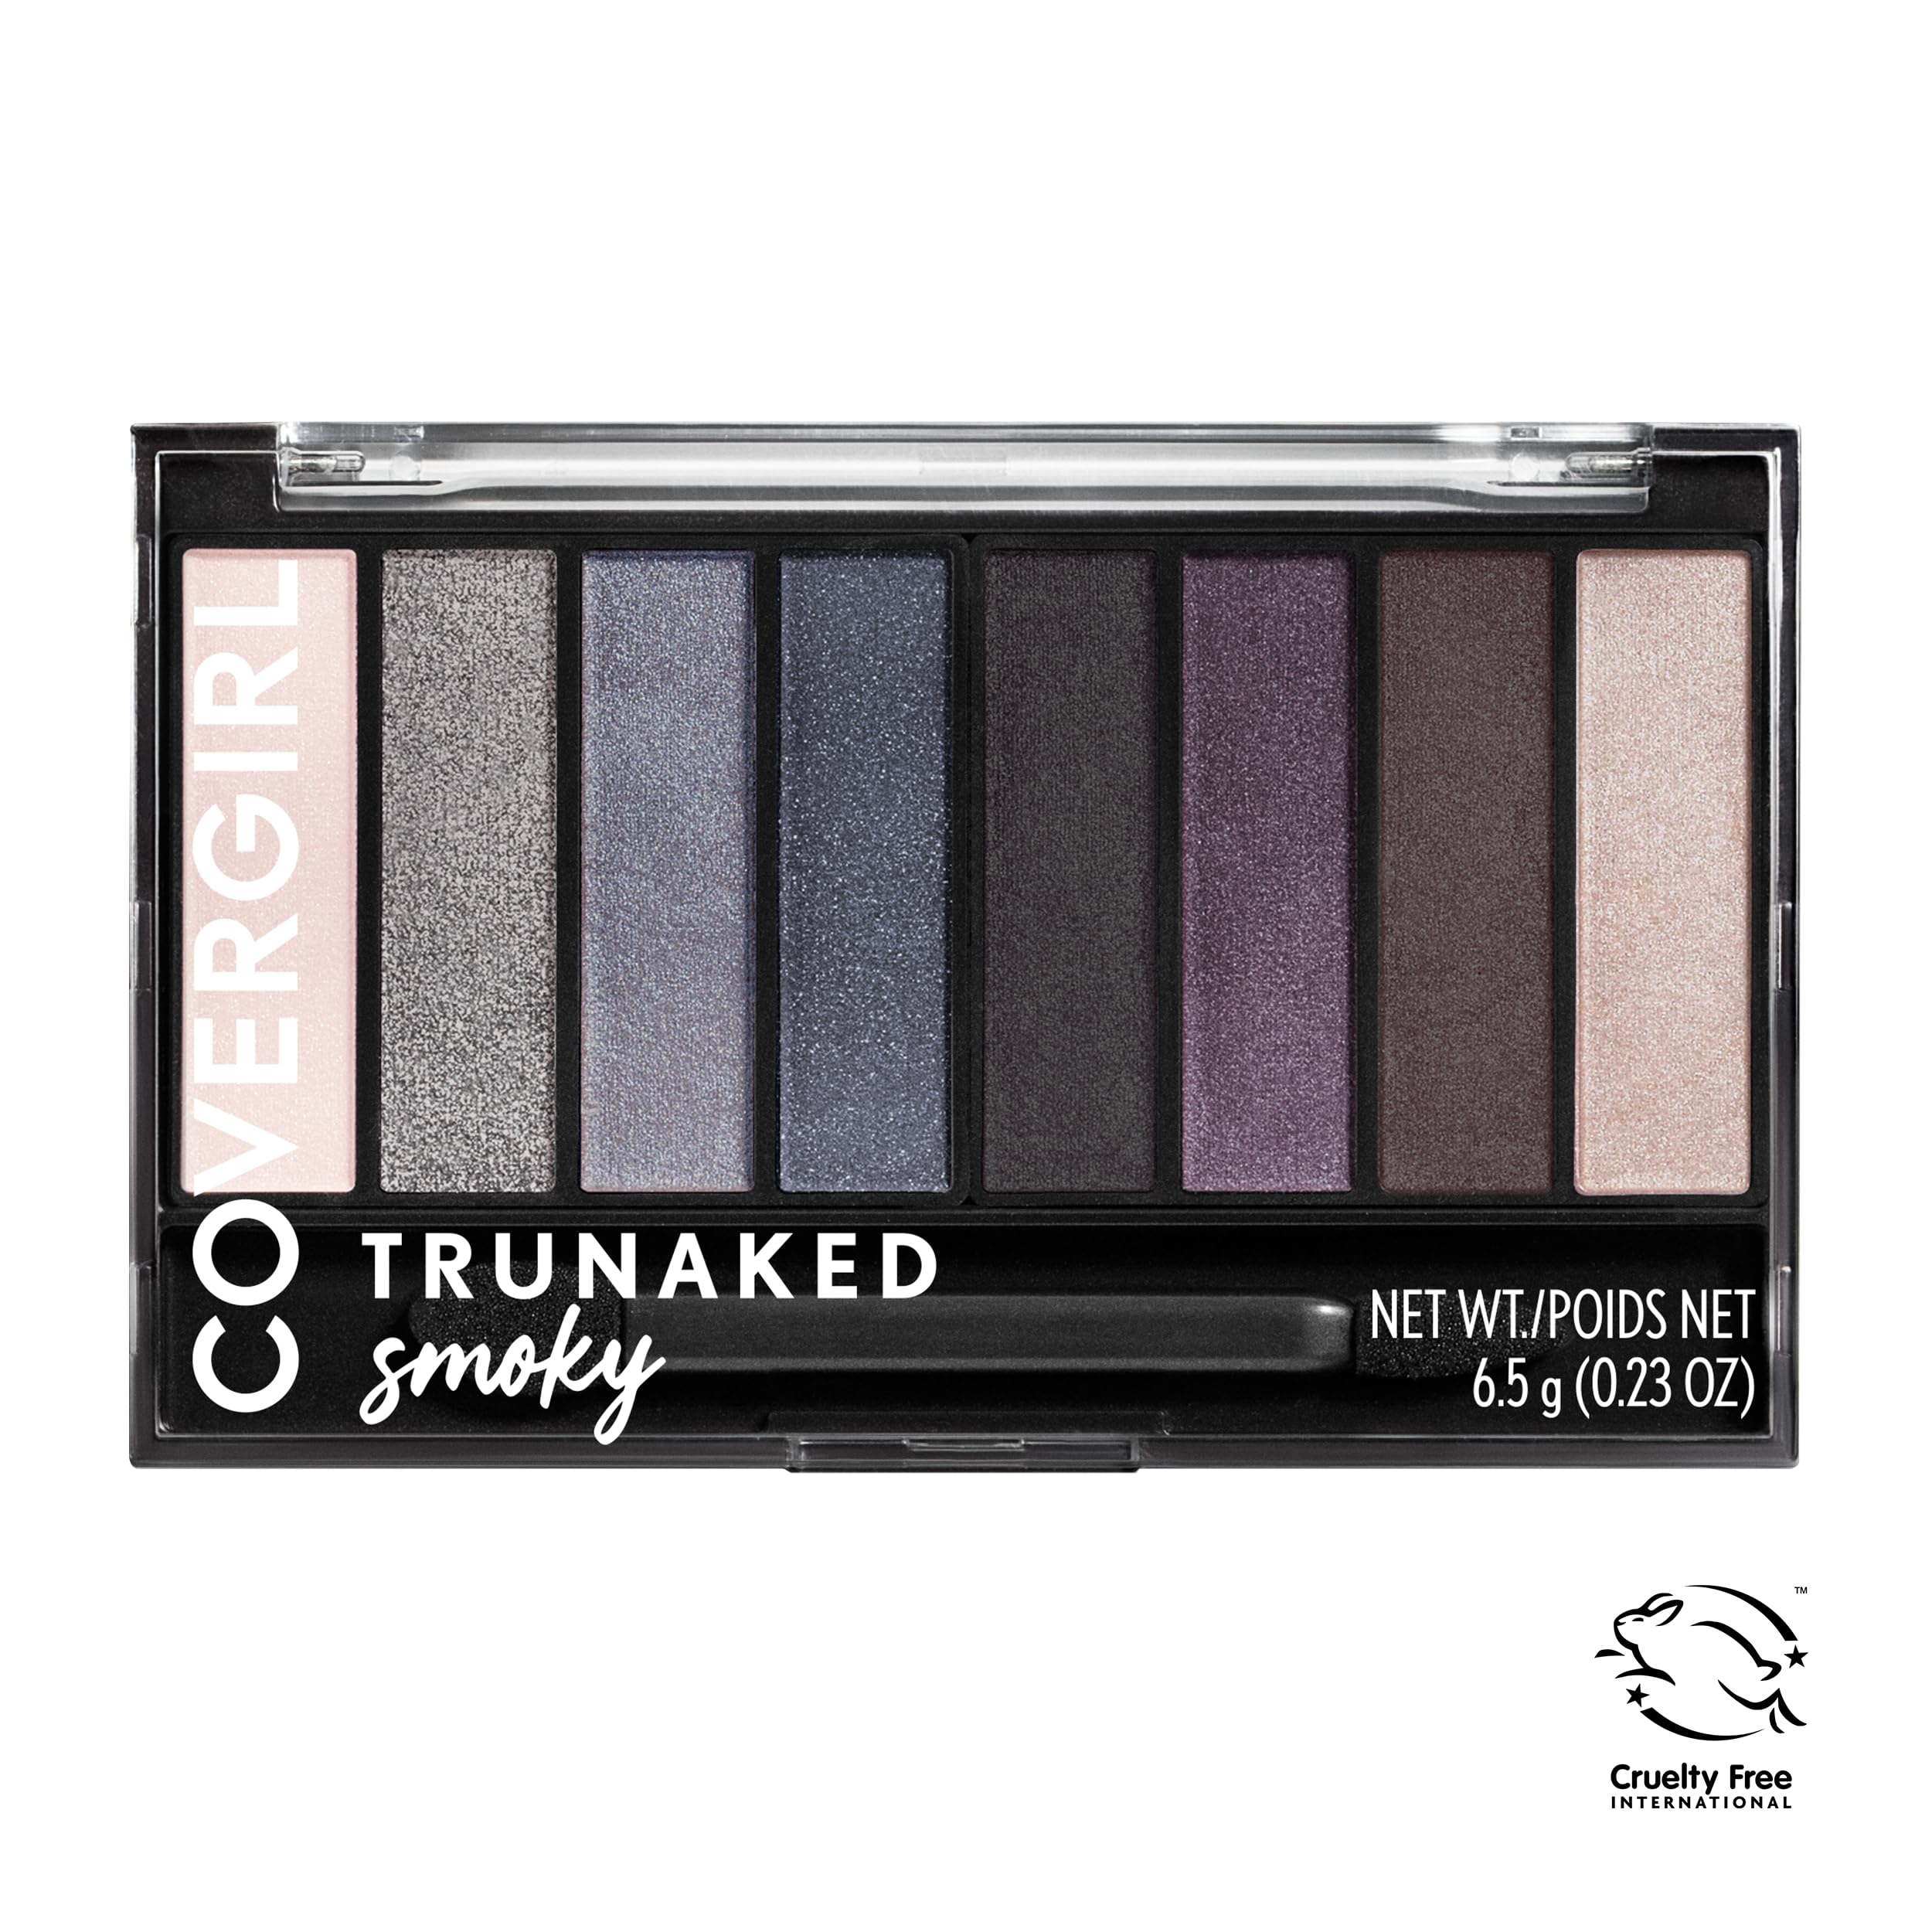 COVERGIRL truNAKED Eyeshadow Palette, Smoky - 820, Pack of 1 (packaging may vary)